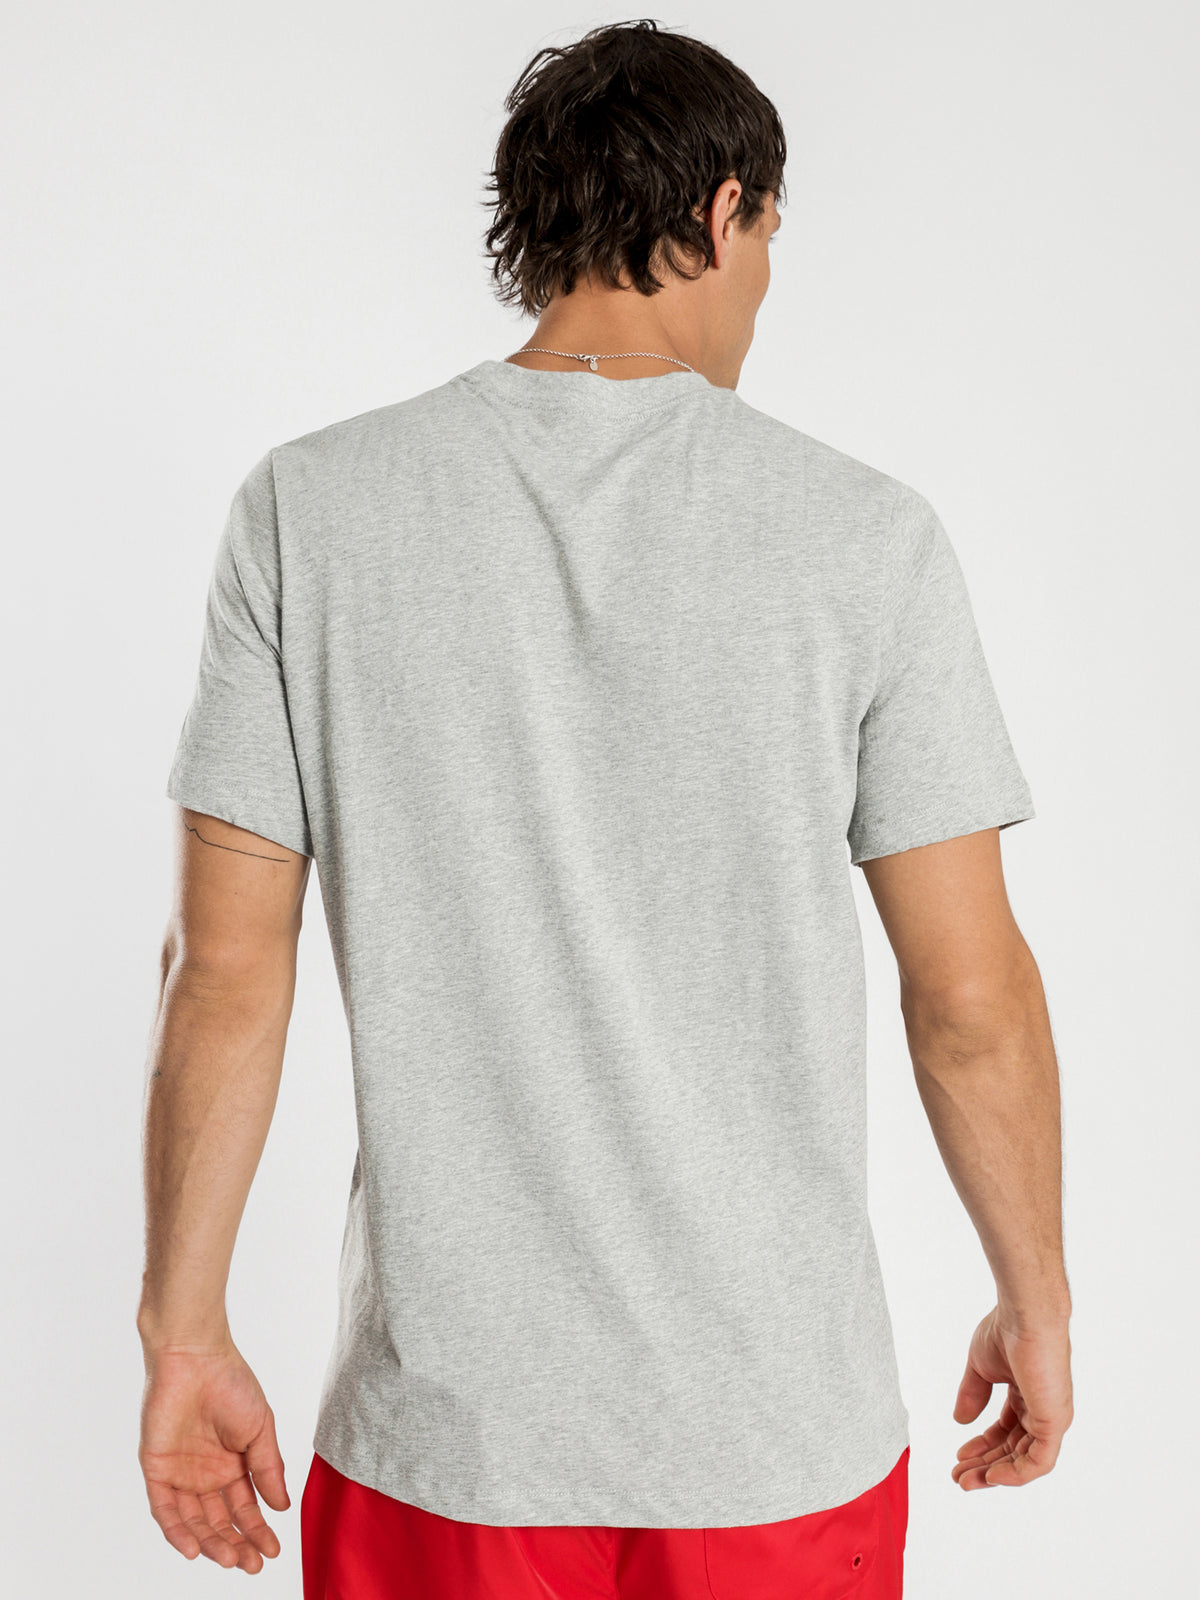 NSW Brand Mark T-Shirt in Grey